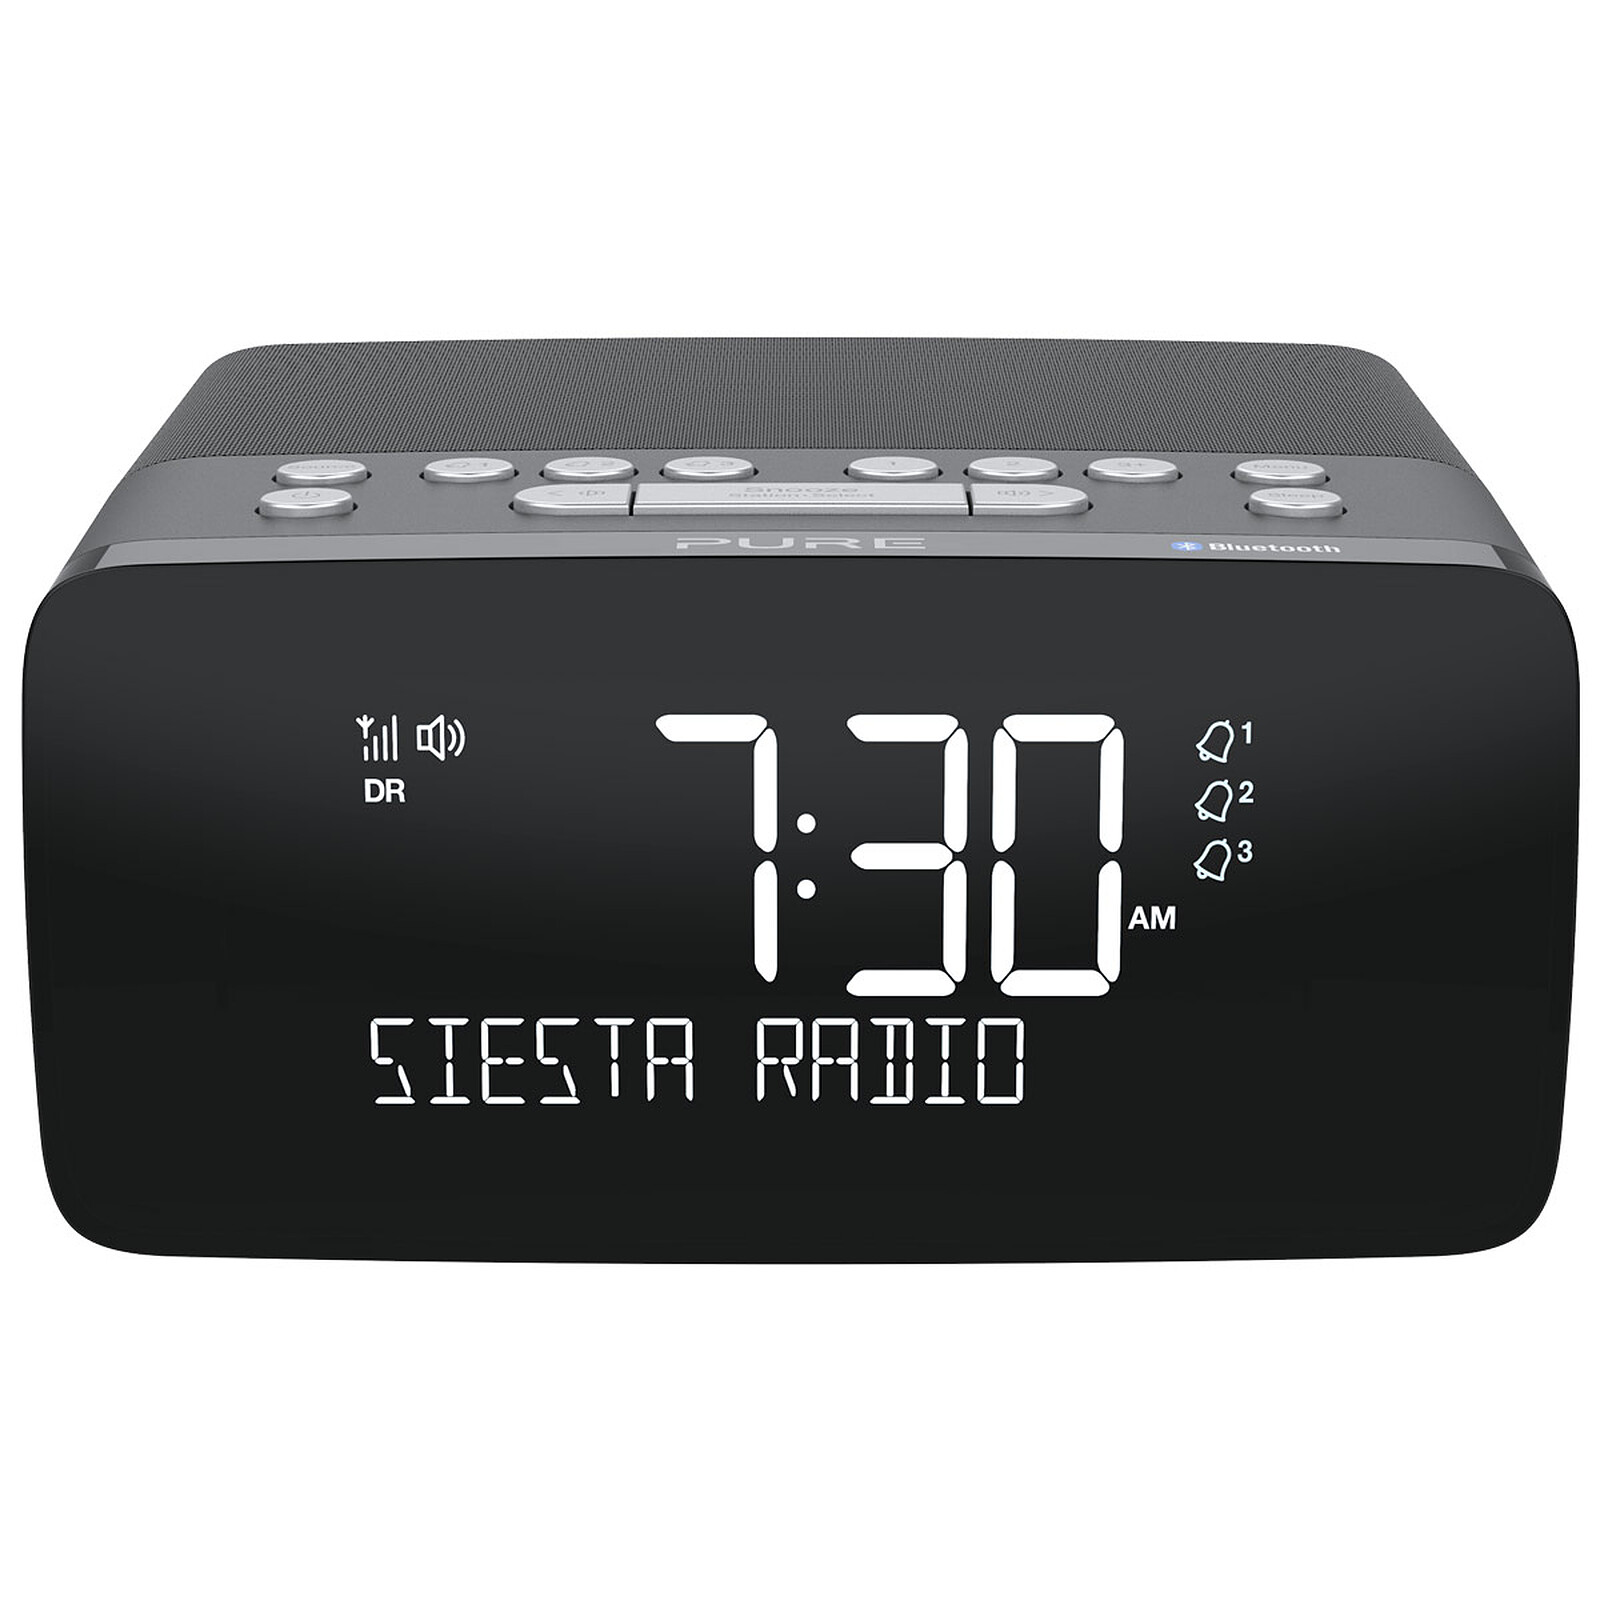 Pantalla CrystalVue+, Bluetooth, DAB/DAB+ ed FM Radio despertador Pure Siesta S6 